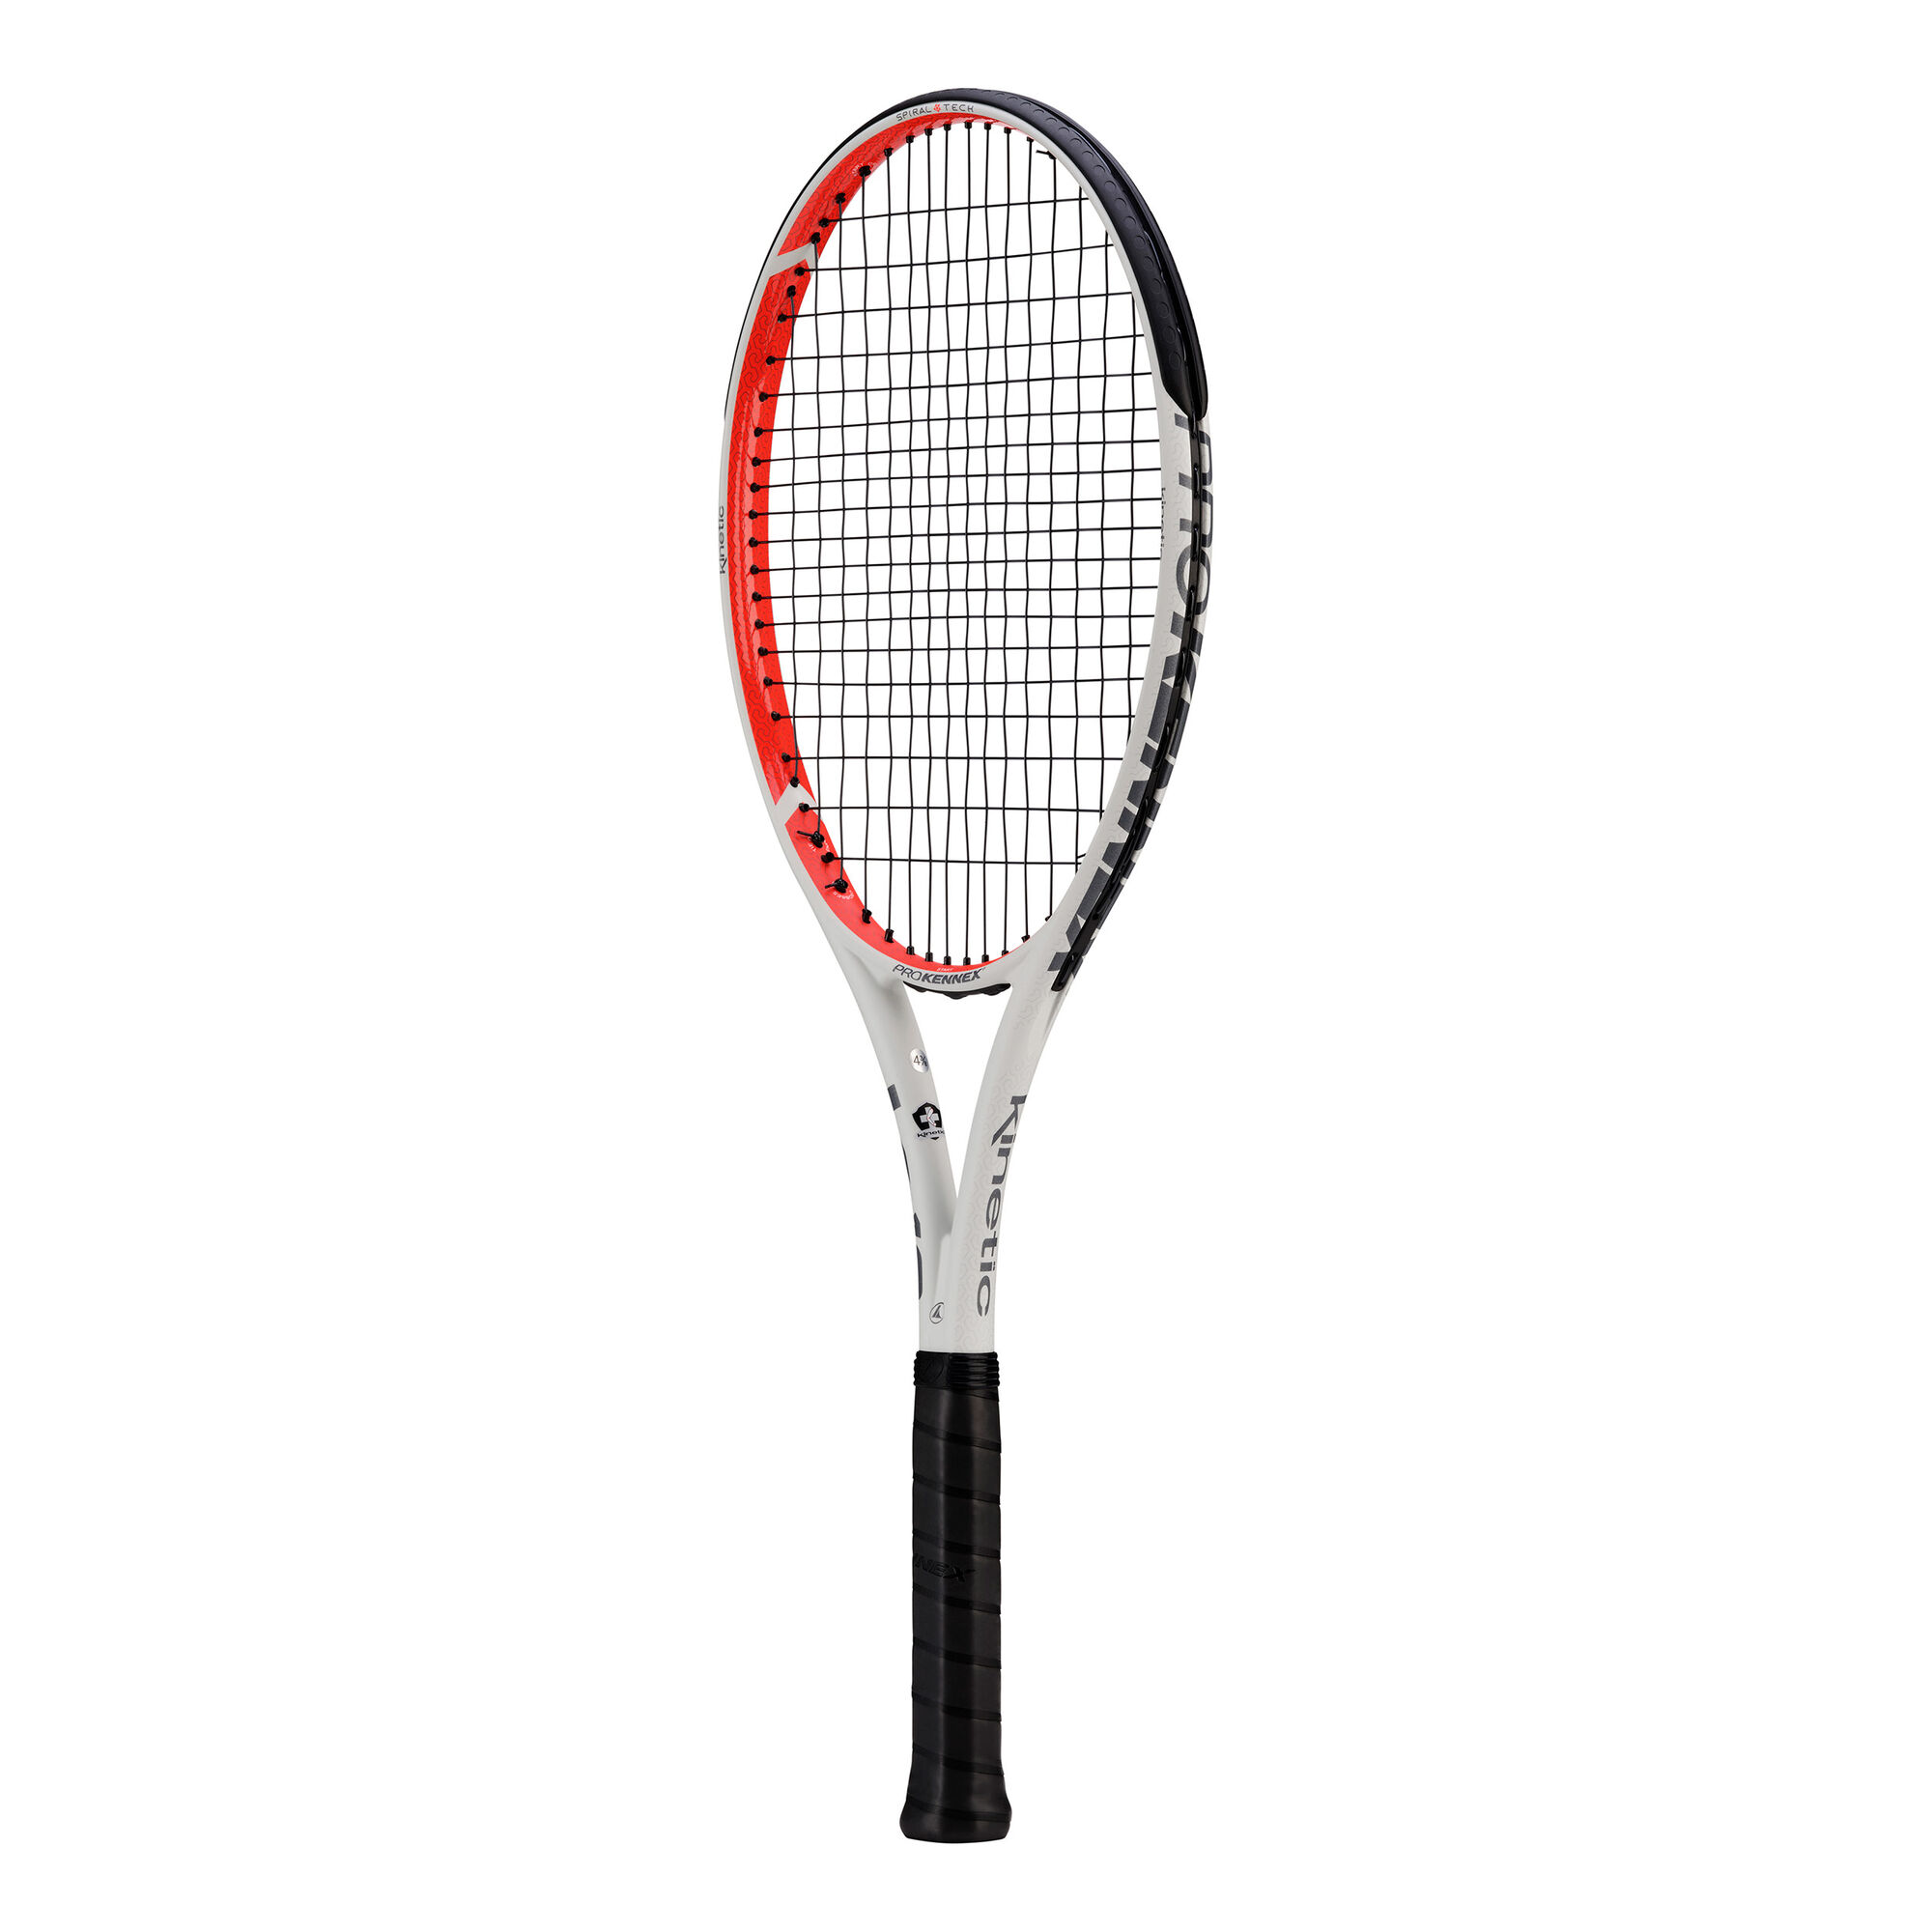 | PROKENNEX COM Point Tennis Kinetic (305g) Buy online 10